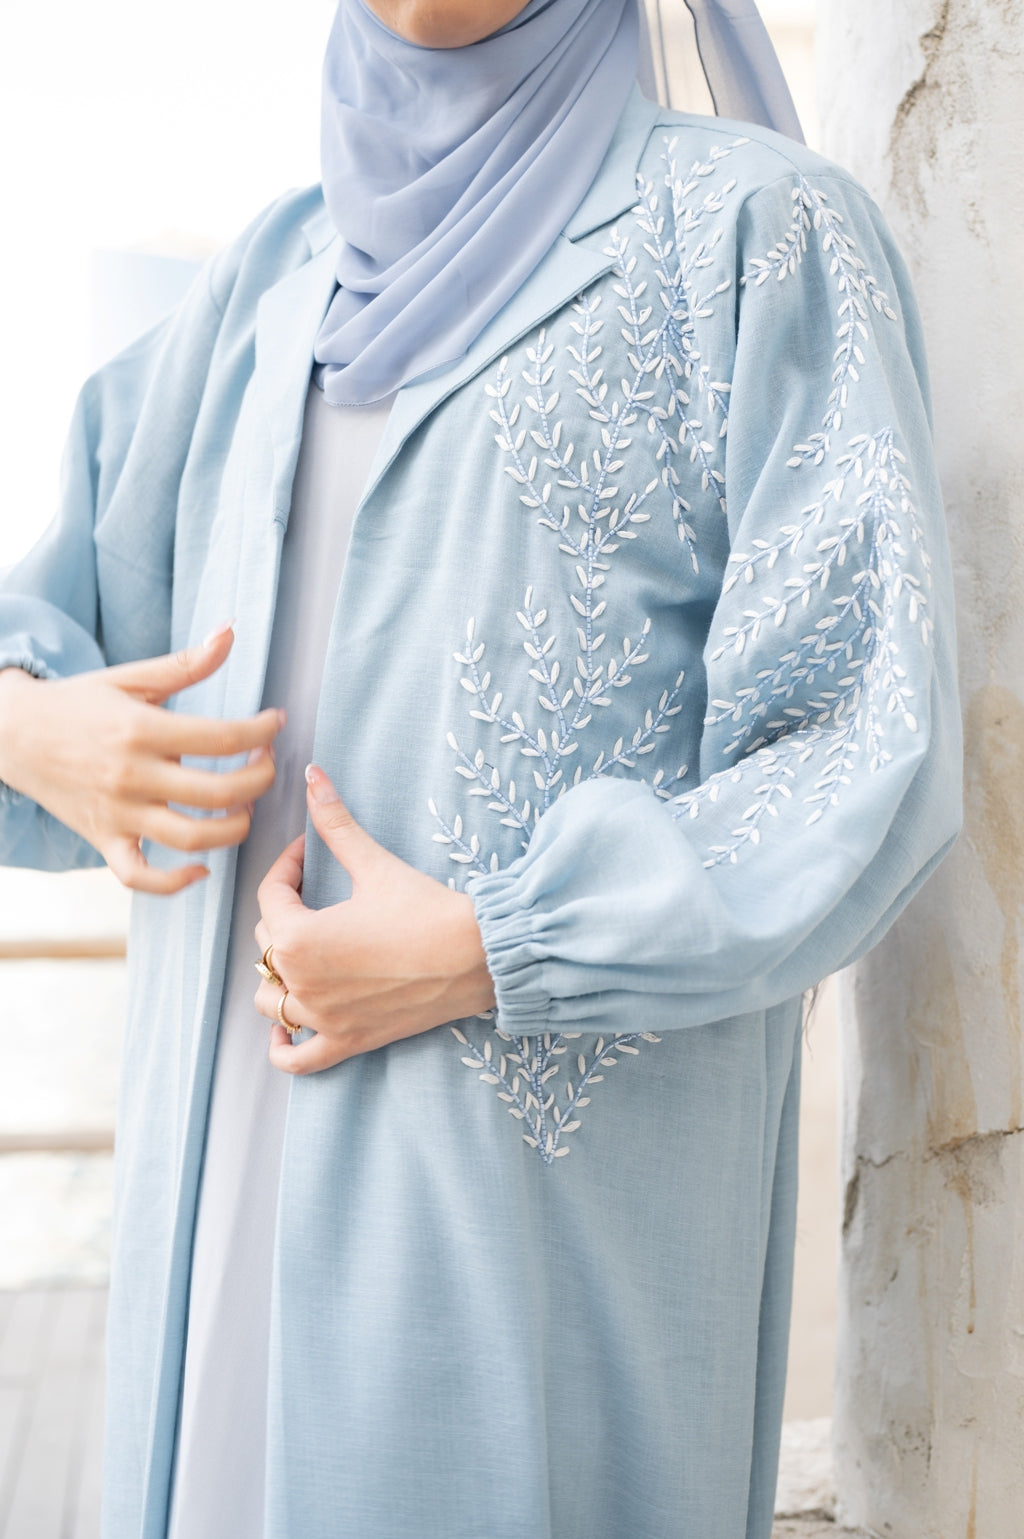 Dubai-made Nukhbaa brand Abaya a reflection of Dubai's luxury fashion scene-LM16